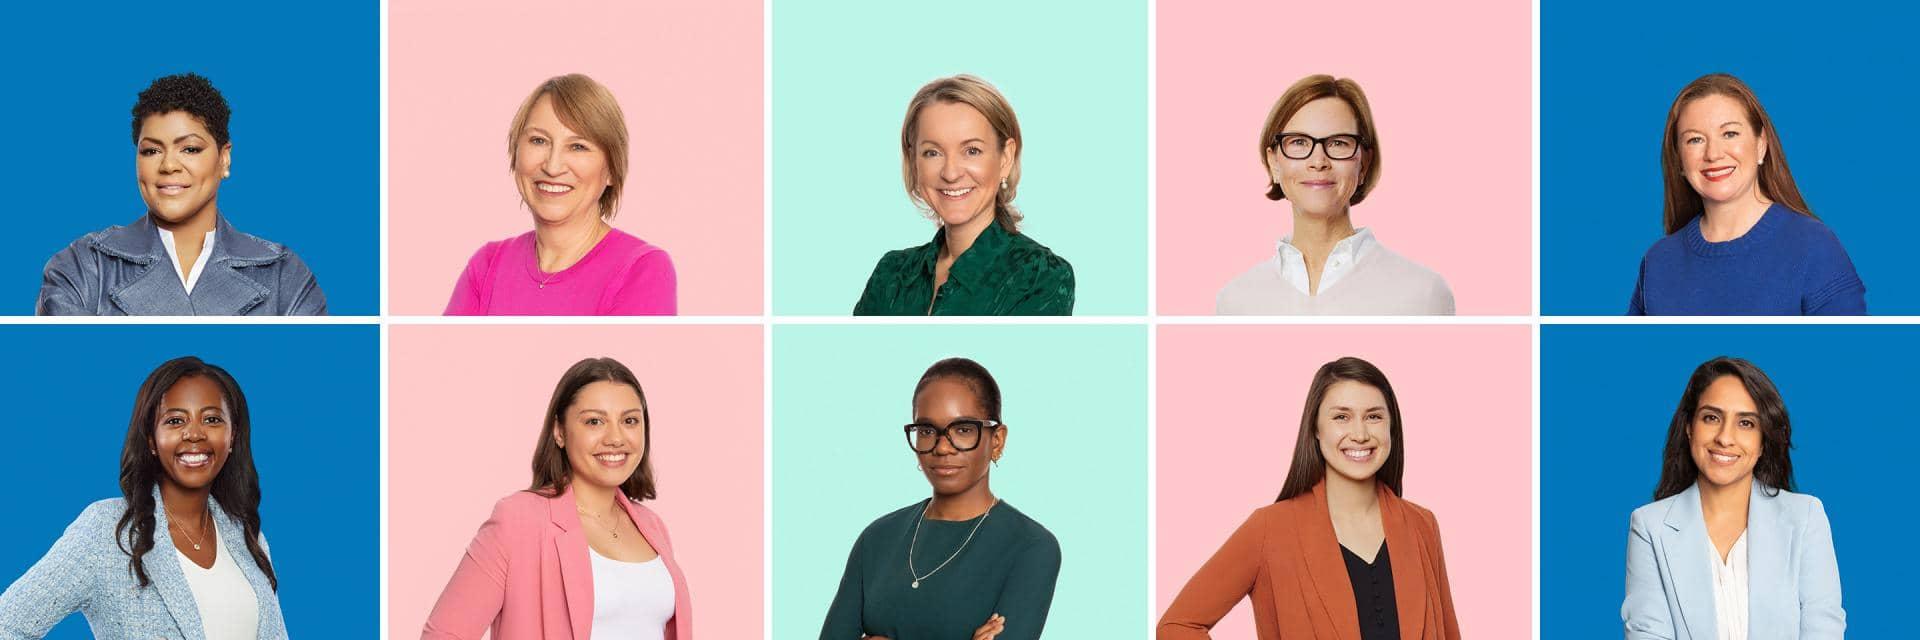 Ten female Barclays colleagues